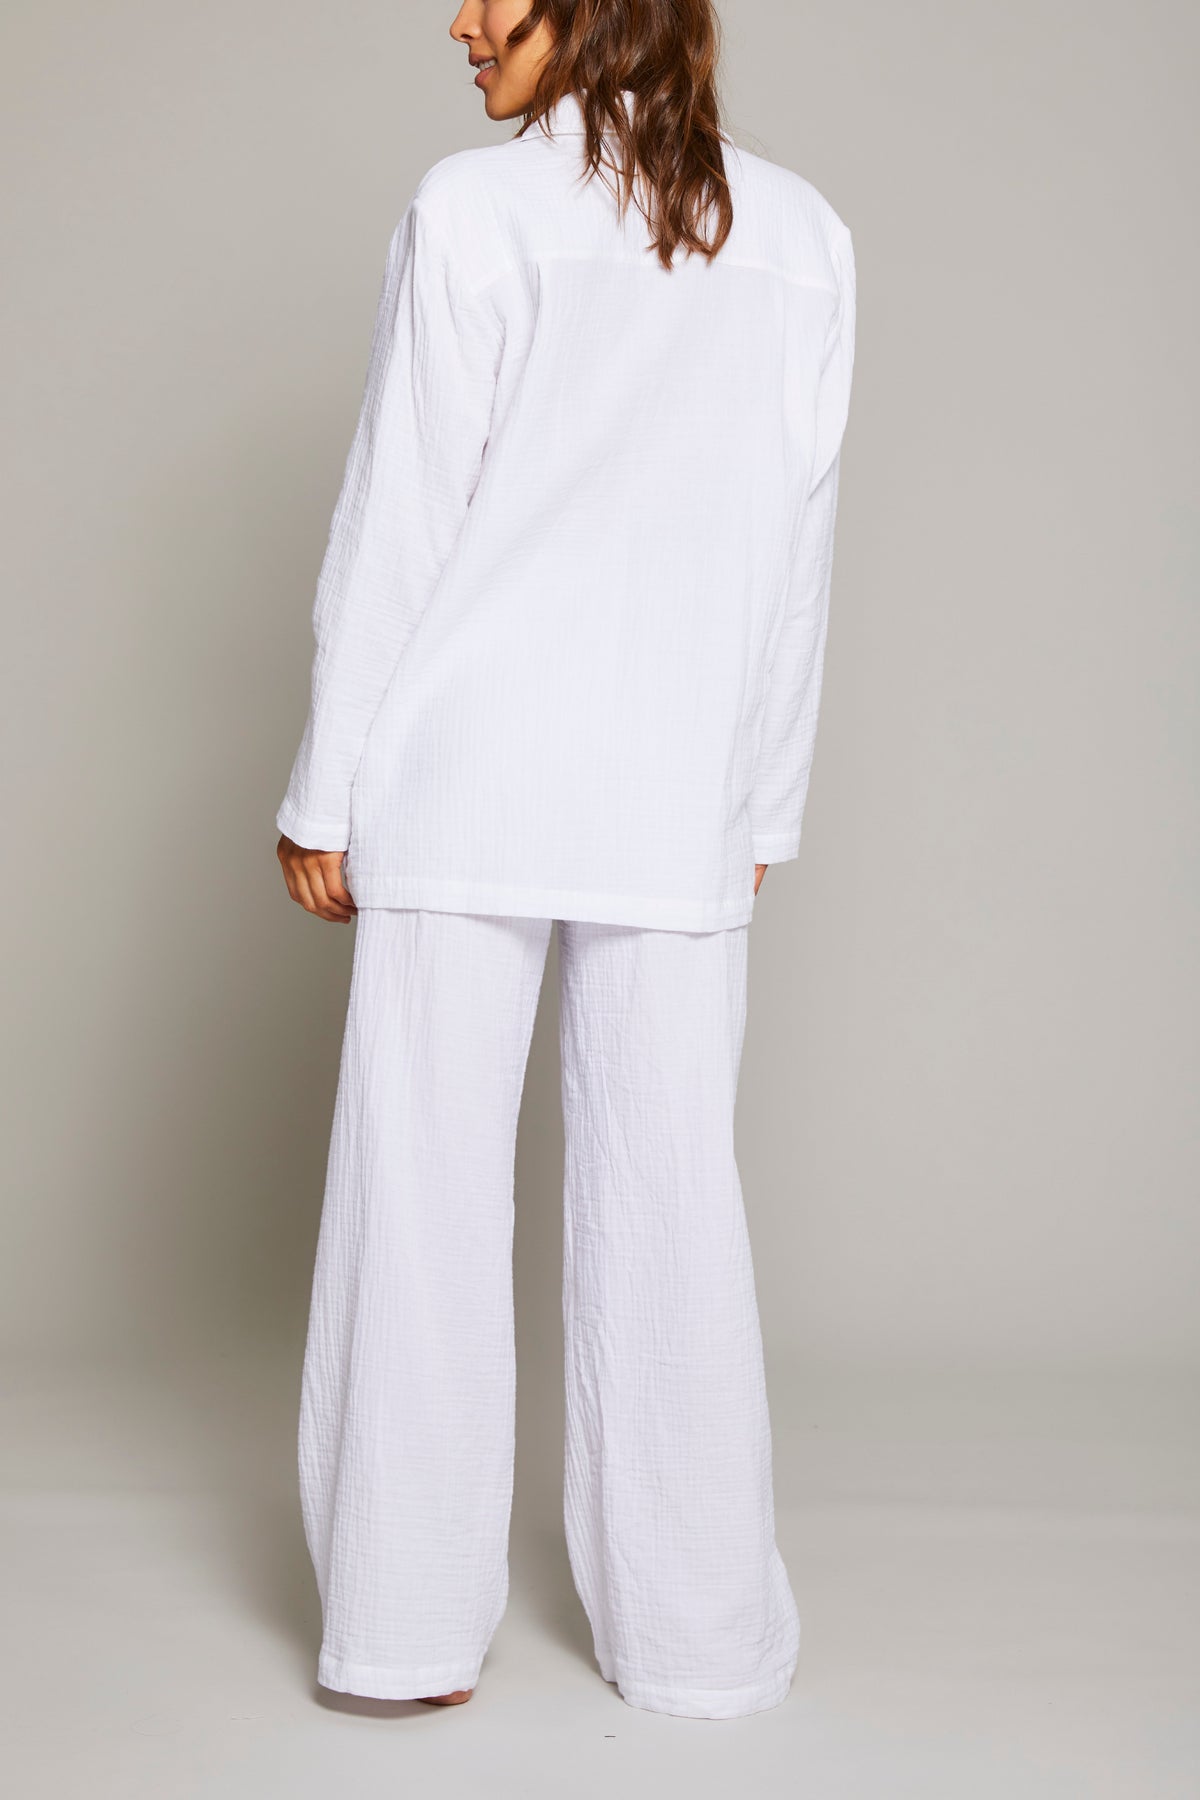 Angel Pajama Set in White